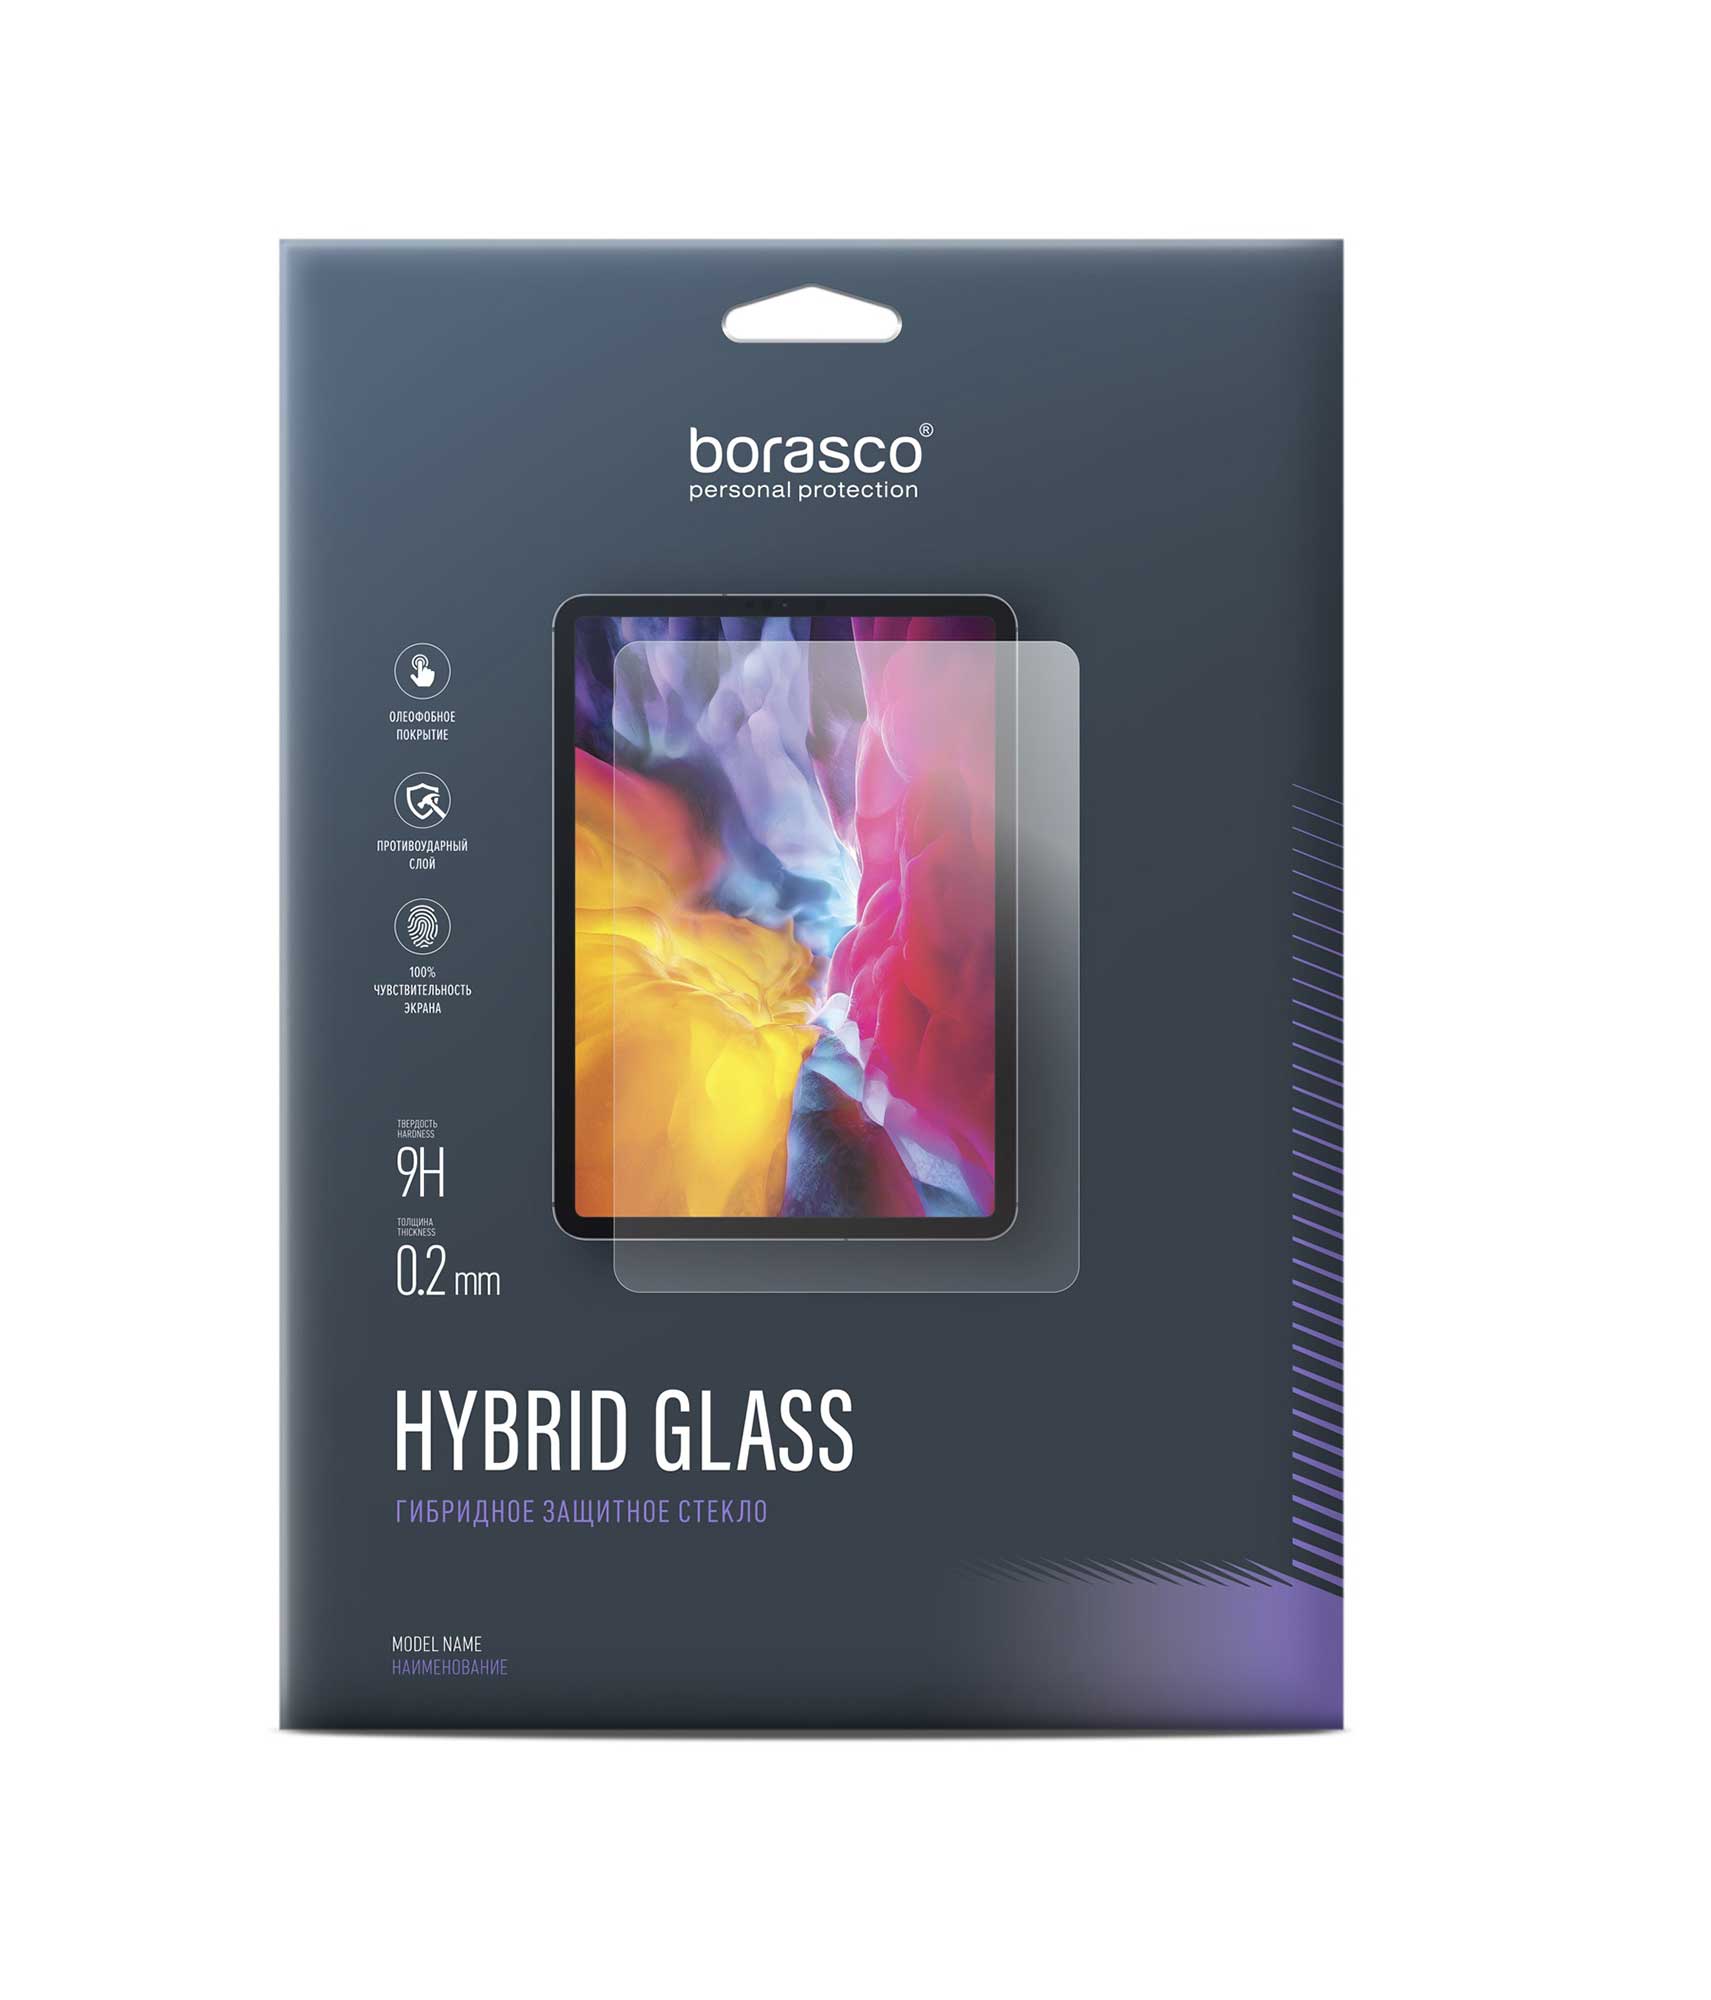 Защитное стекло Hybrid Glass для Apple iPad Pro 11 (2021) 2 шт защитная пленка на весь экран для ipad pro 11 2018 2020 9h стекло для планшета закаленное стекло для apple ipad pro 11 дюймов 2021 2 5d